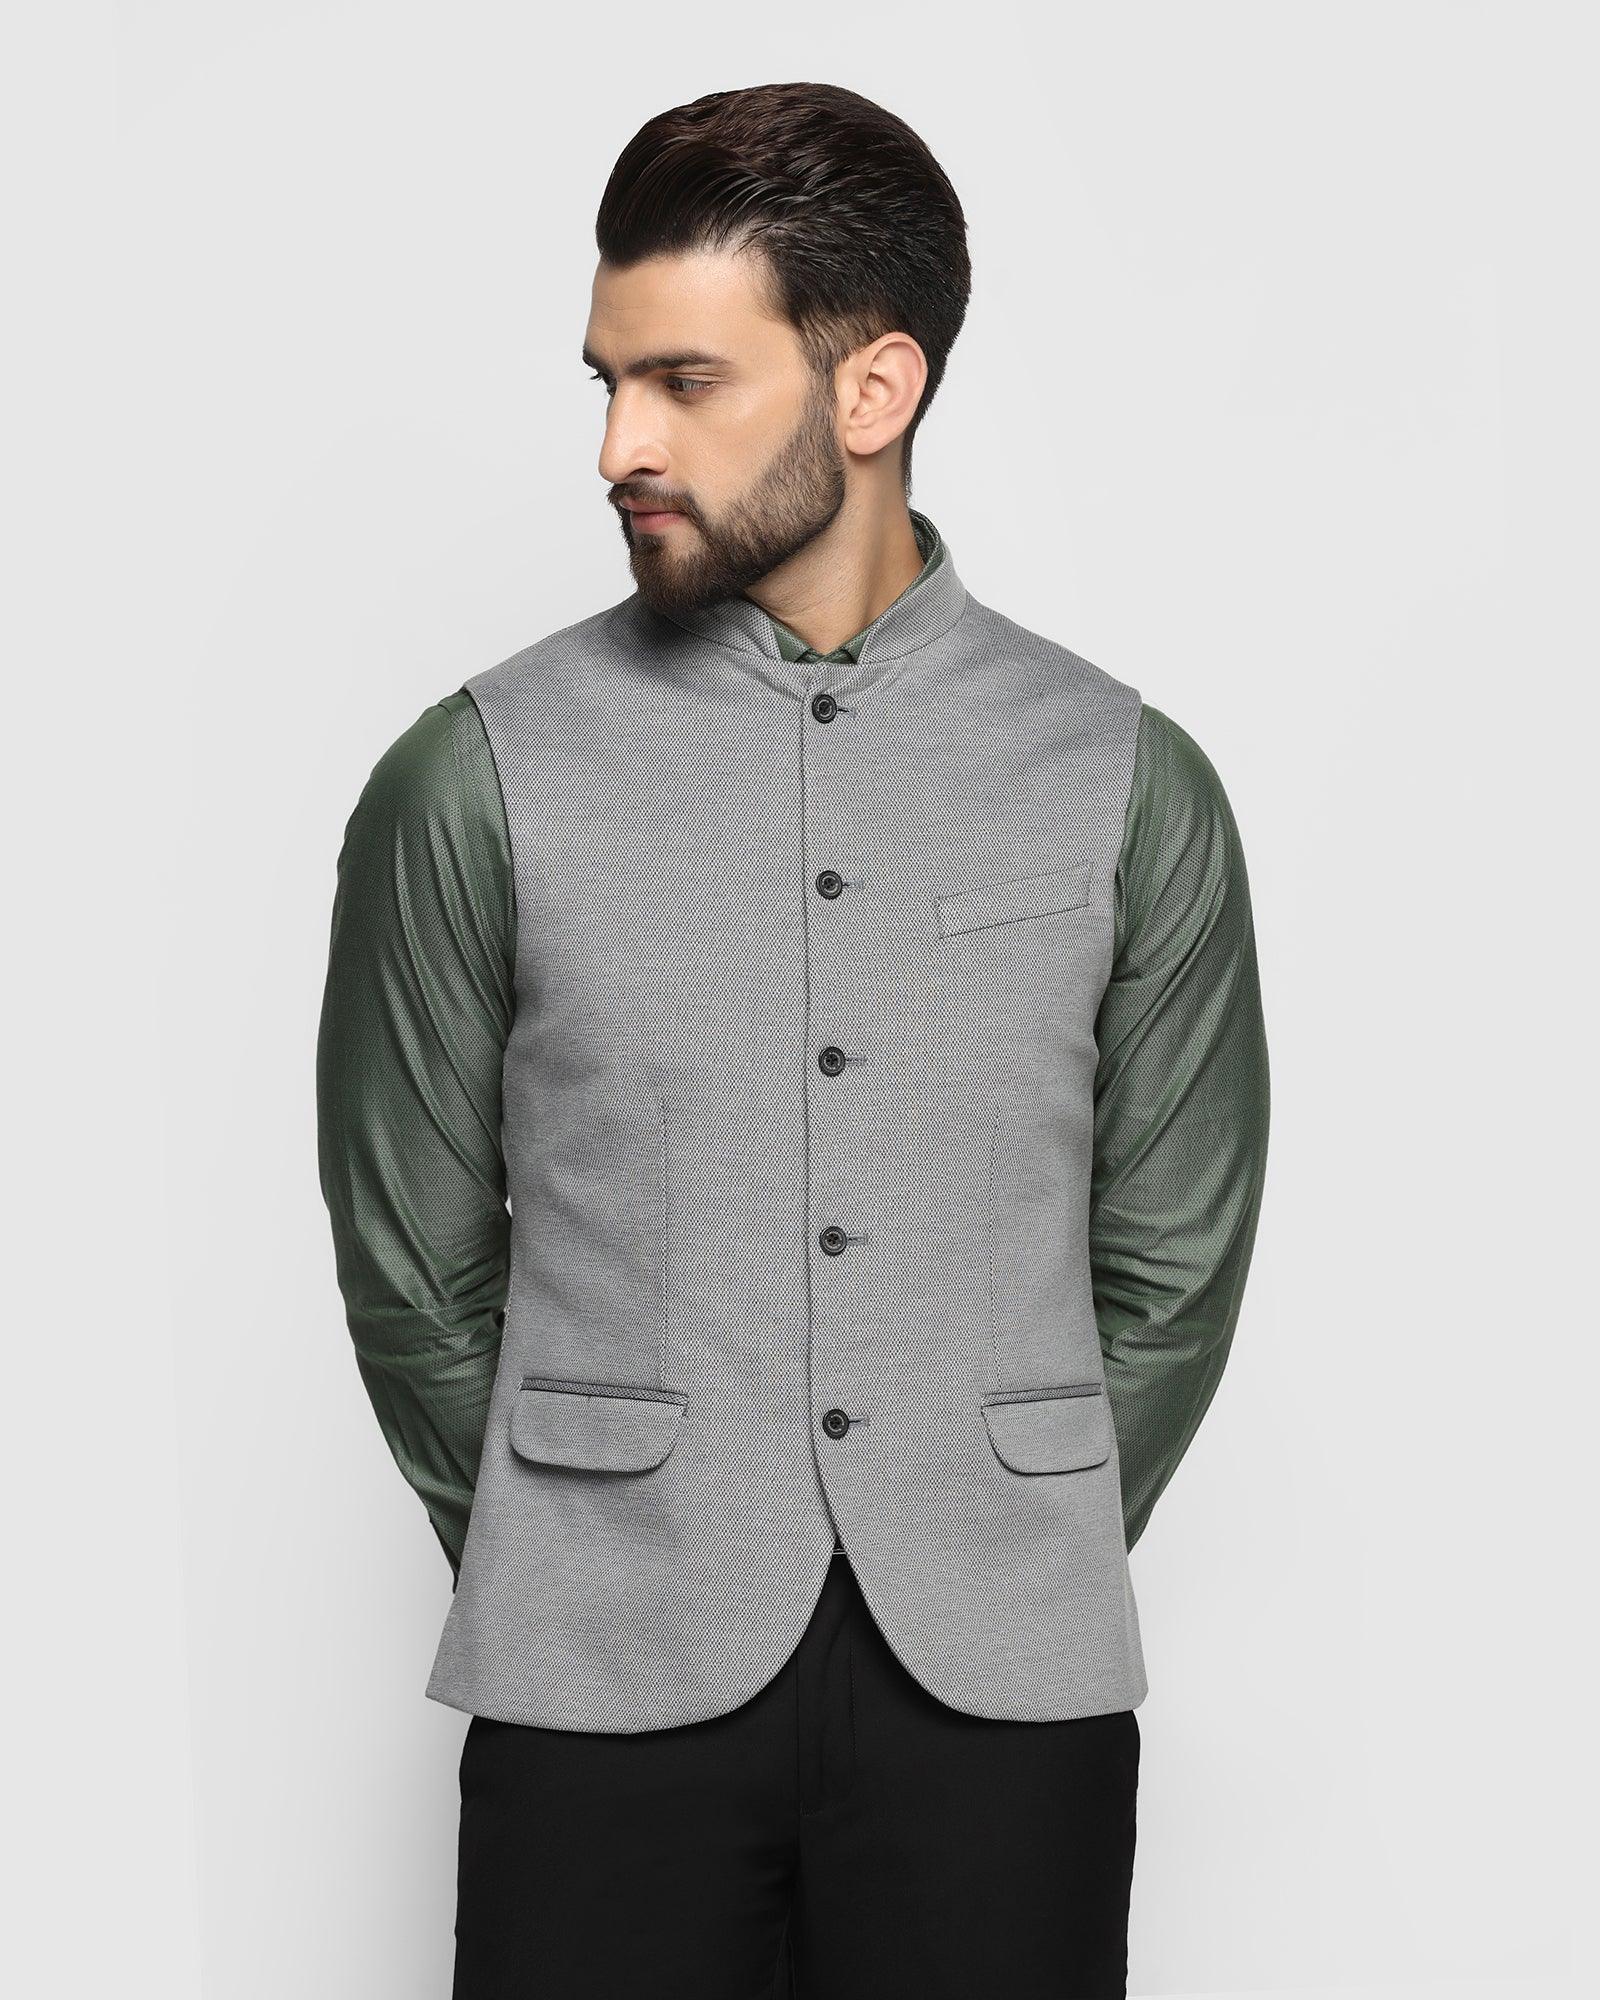 Bandhgala Formal Grey Textured Waistcoat - Abran